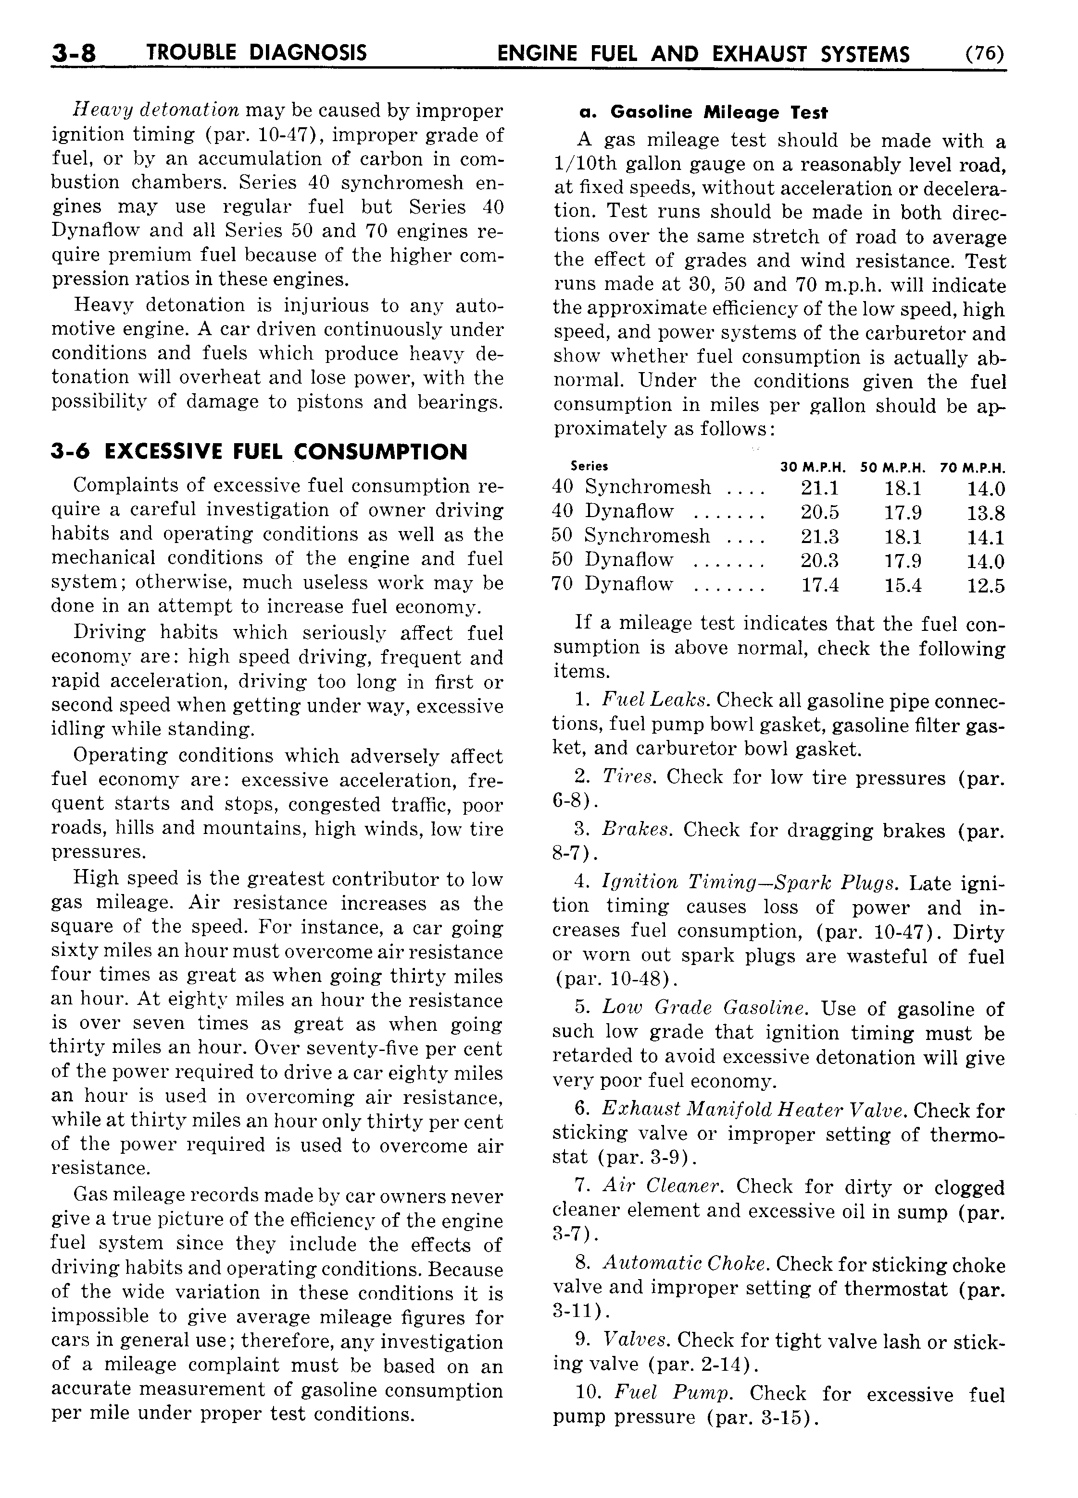 n_04 1951 Buick Shop Manual - Engine Fuel & Exhaust-008-008.jpg